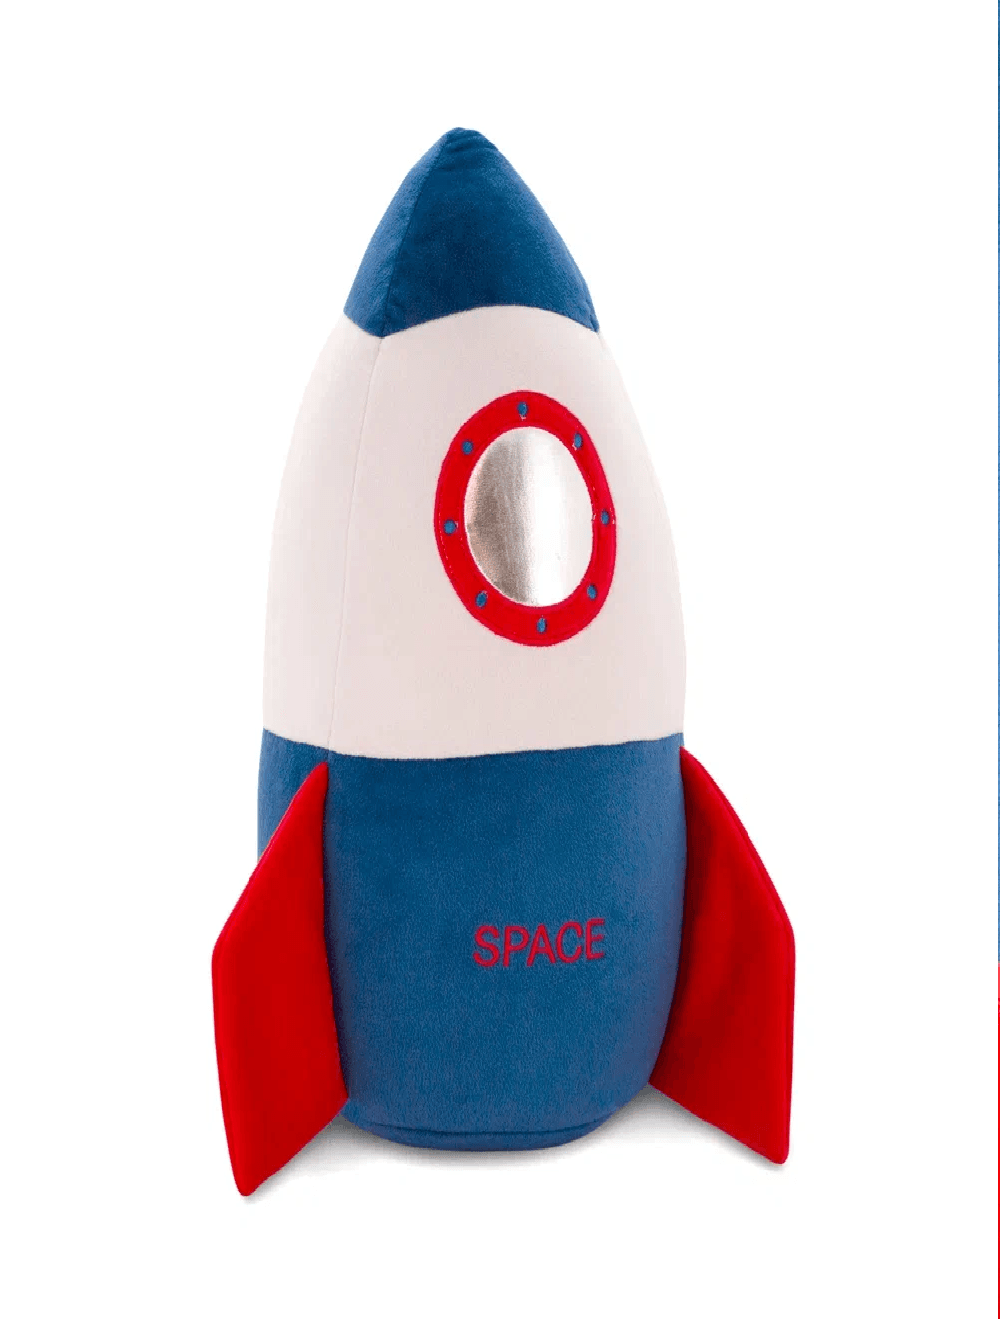 Selected image for ORANGE TOYS Meka igračka-jastuk Rocket